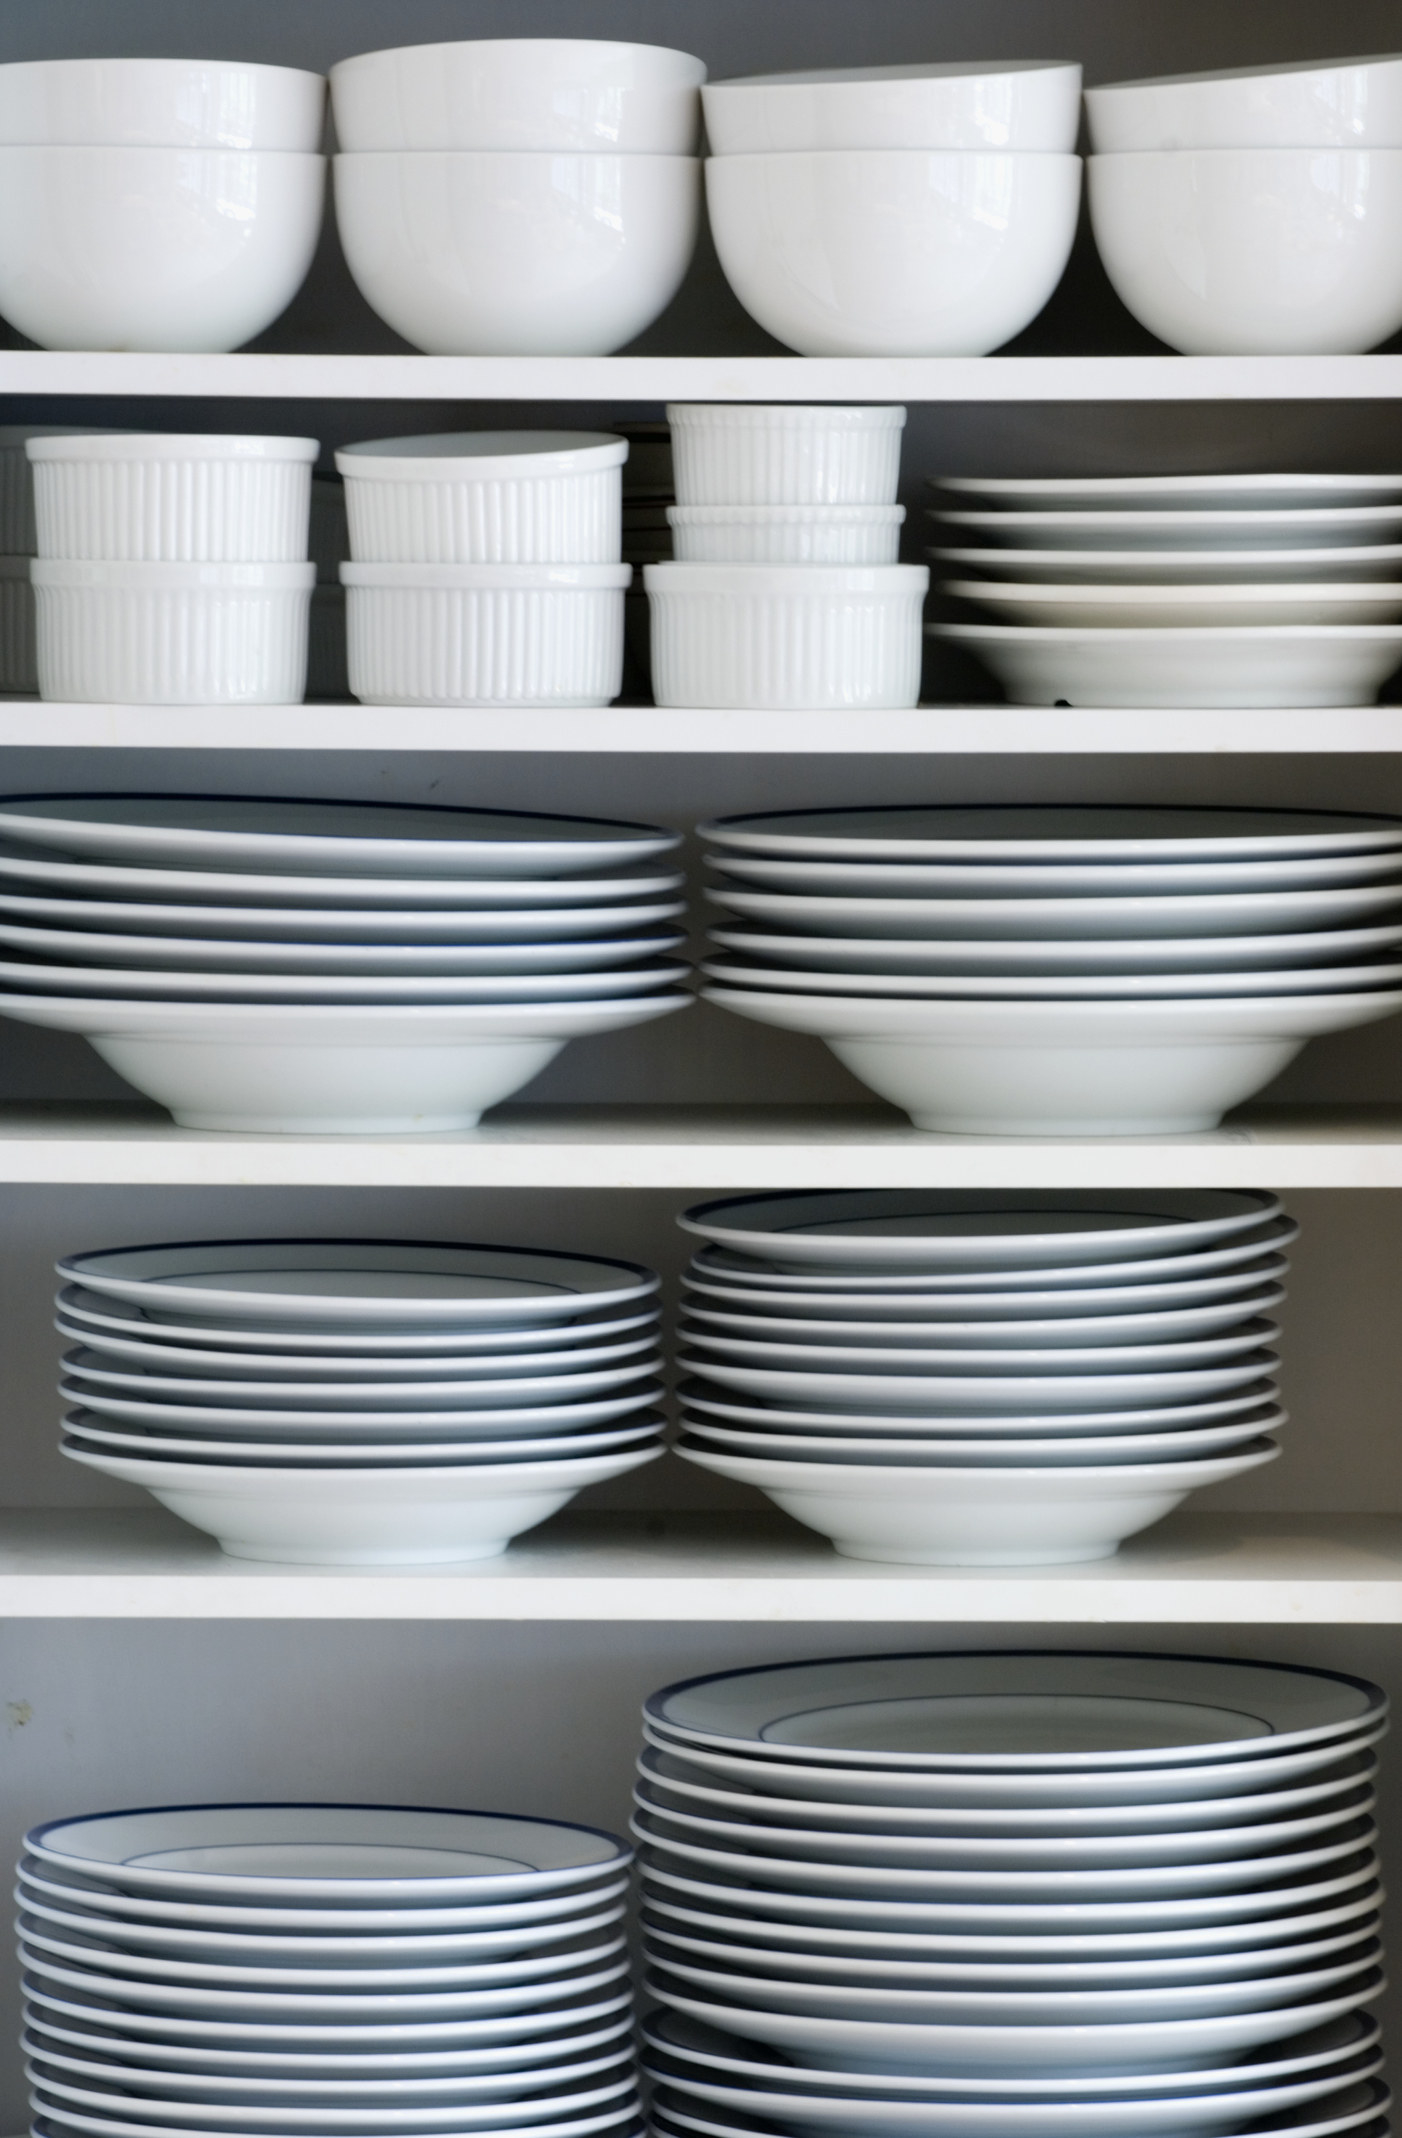 Shelves of white dishes